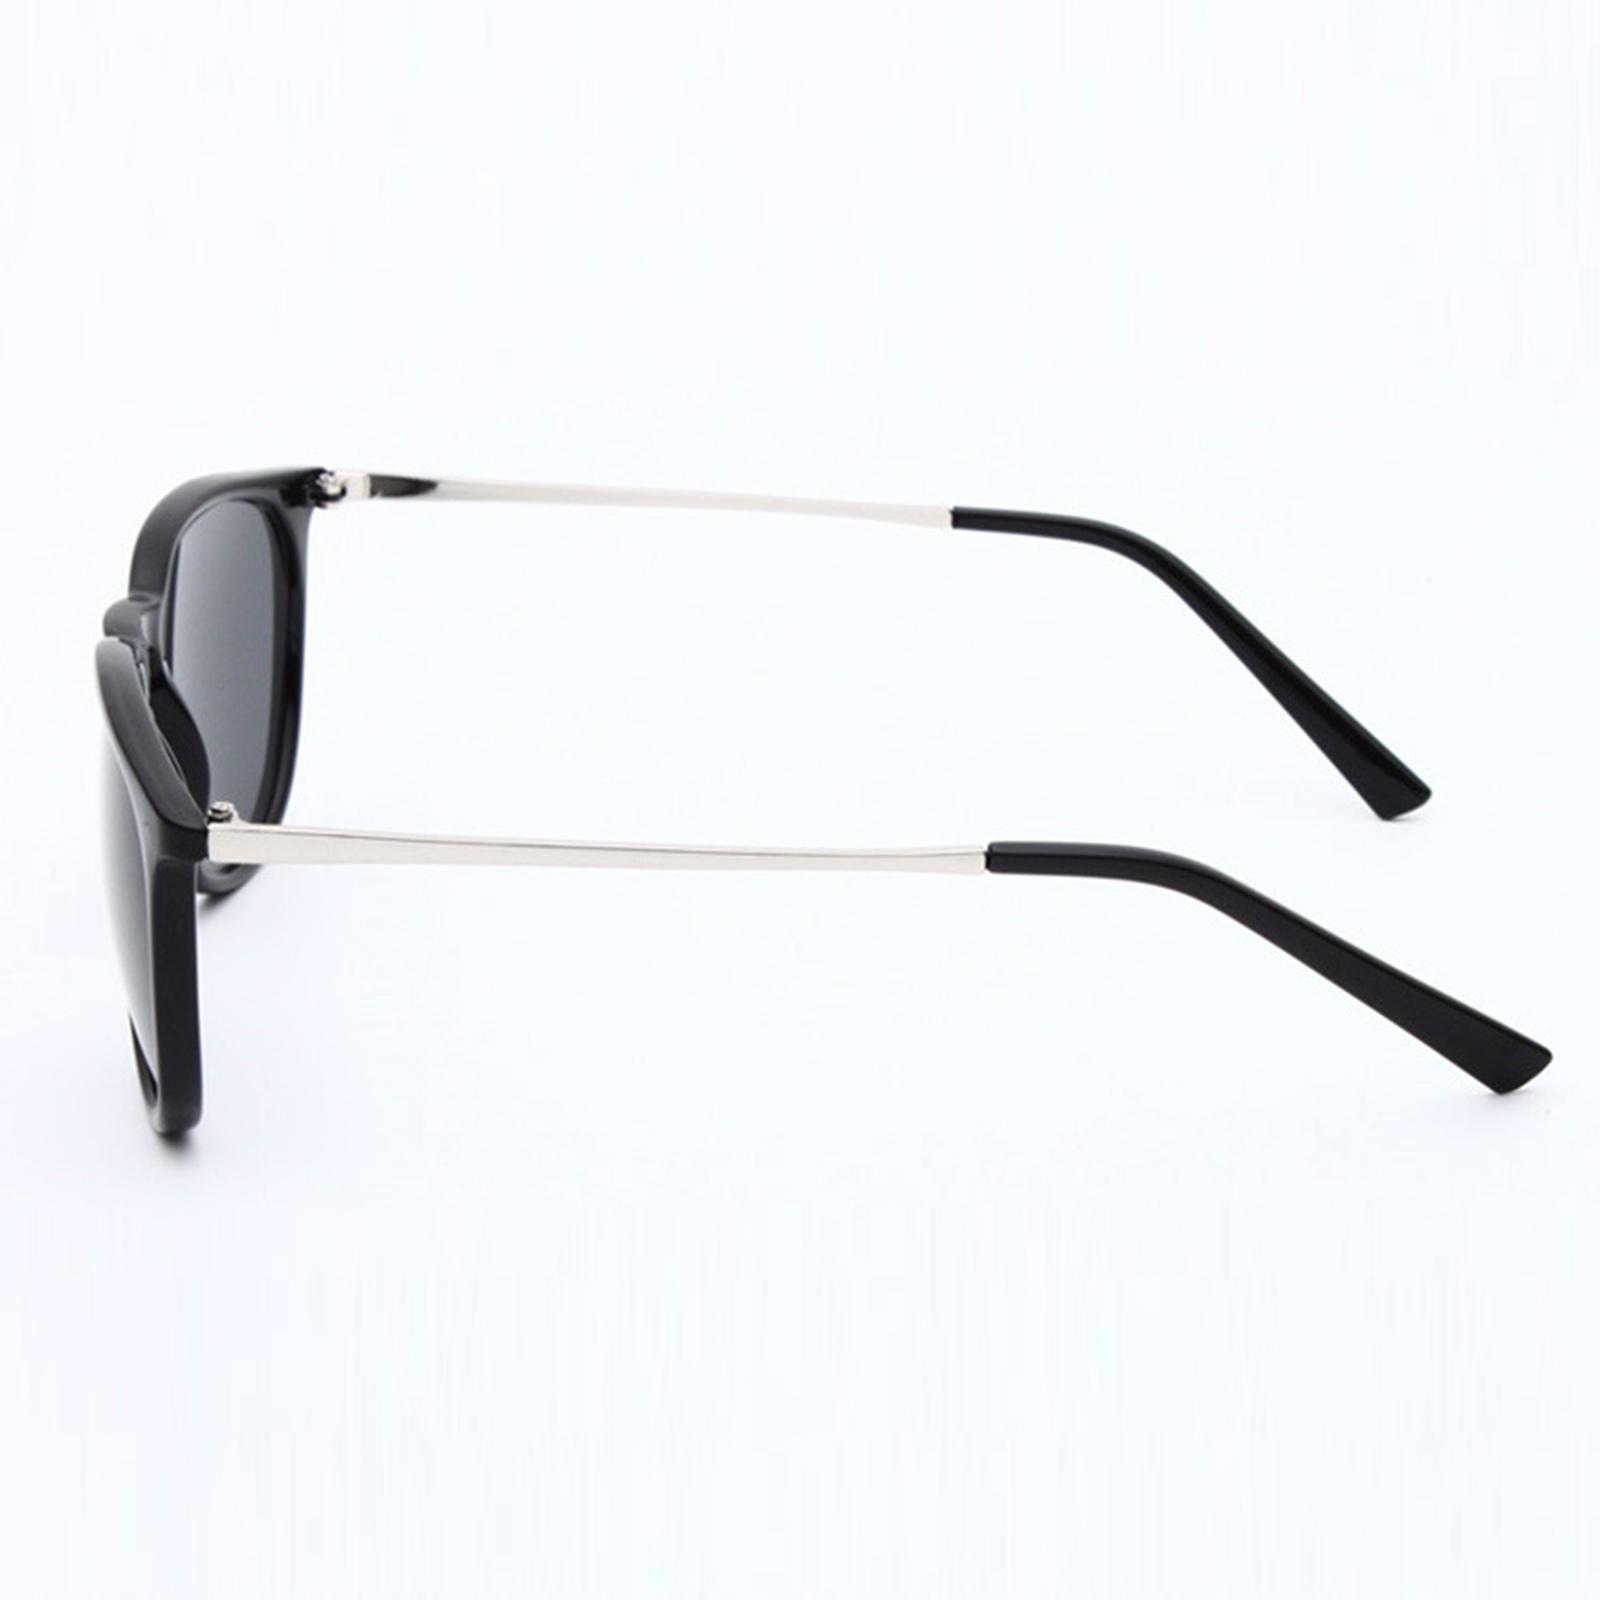 Trendy Sunglasses, Oval Frame Sun Glasses Eyewear UV400 Protection Eyeglasses for Party